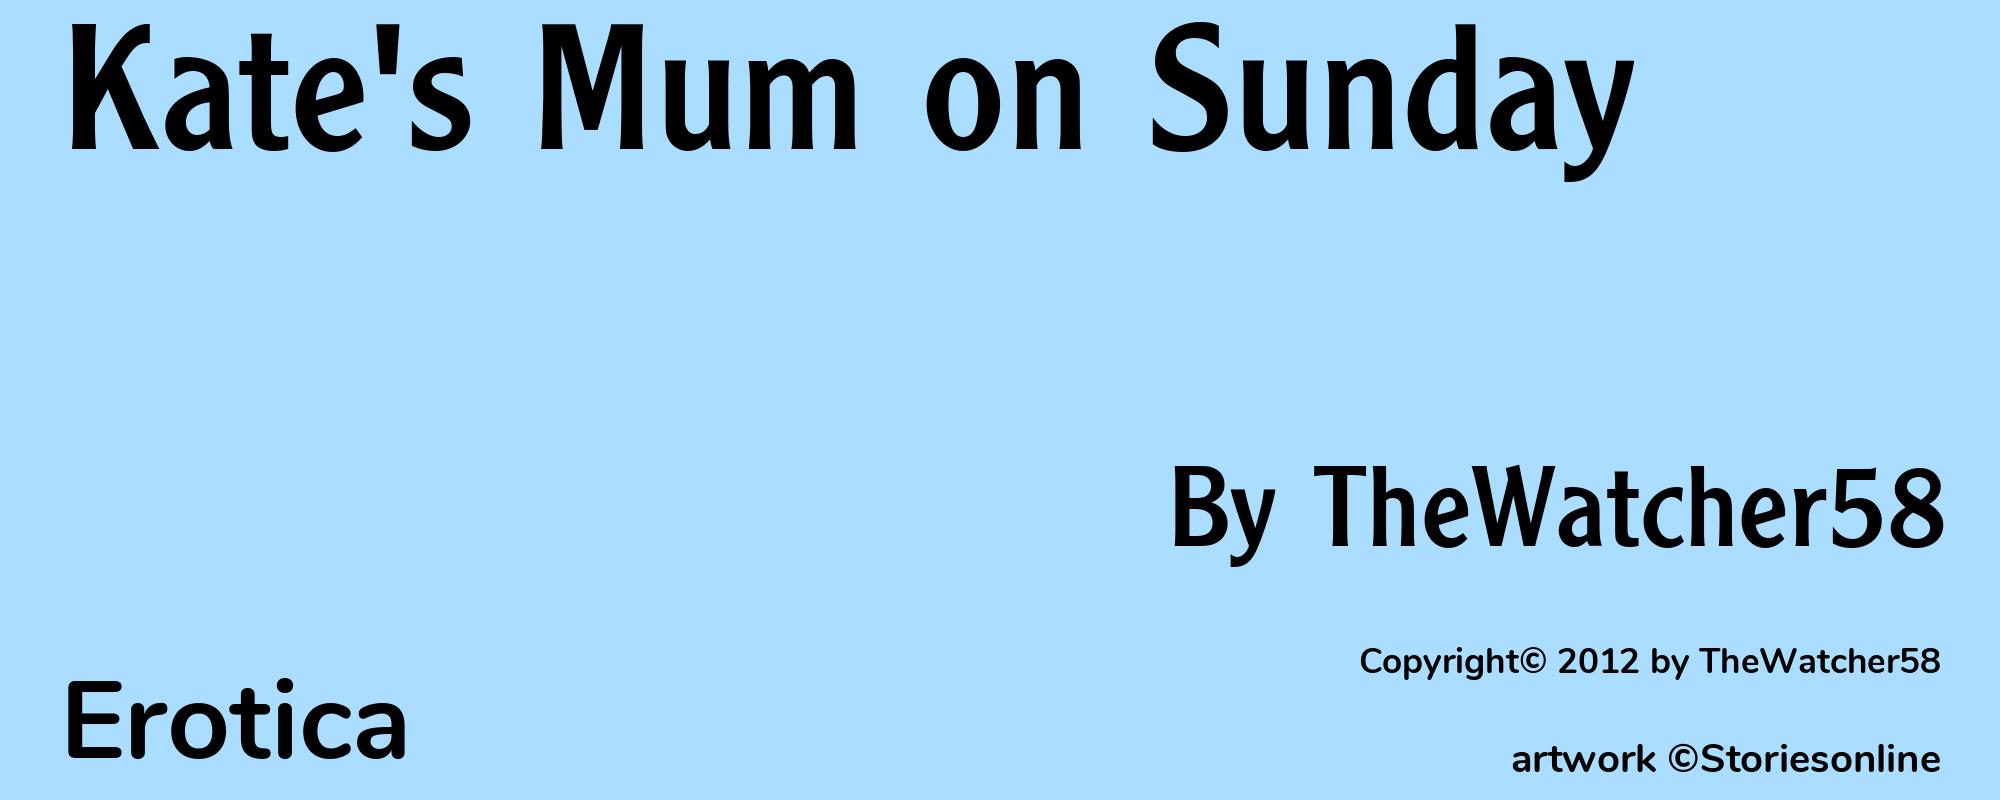 Kate's Mum on Sunday - Cover